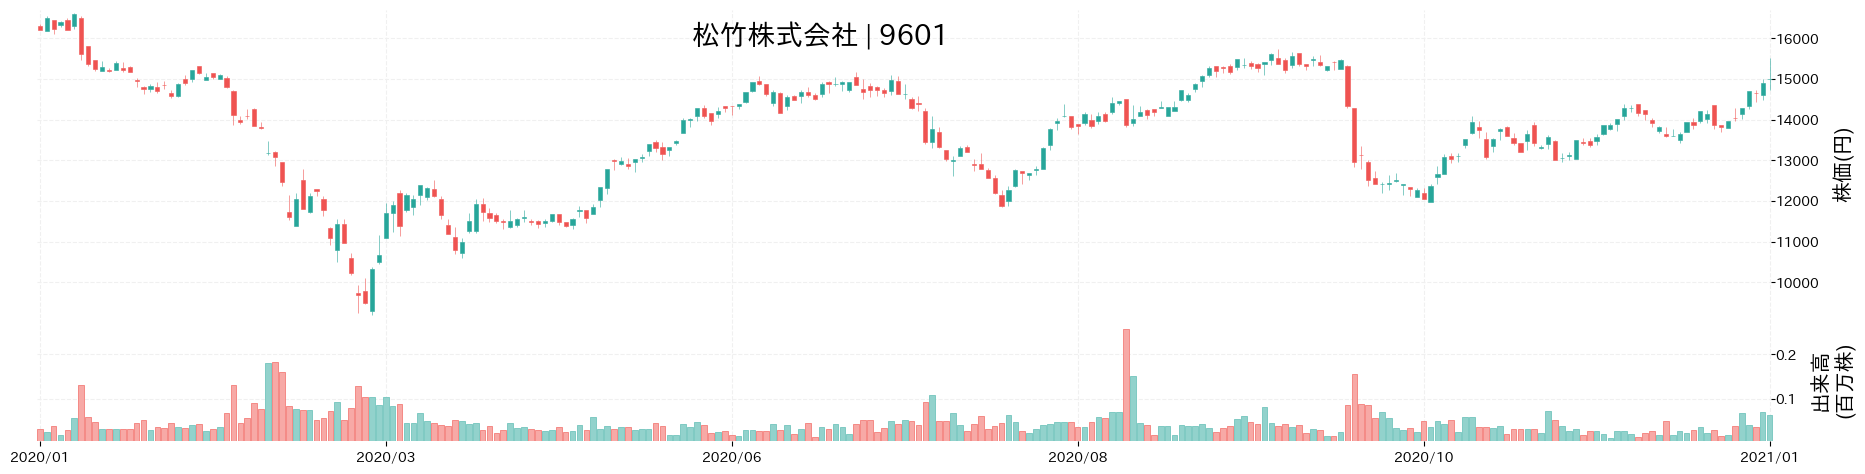 松竹の株価推移(2020)